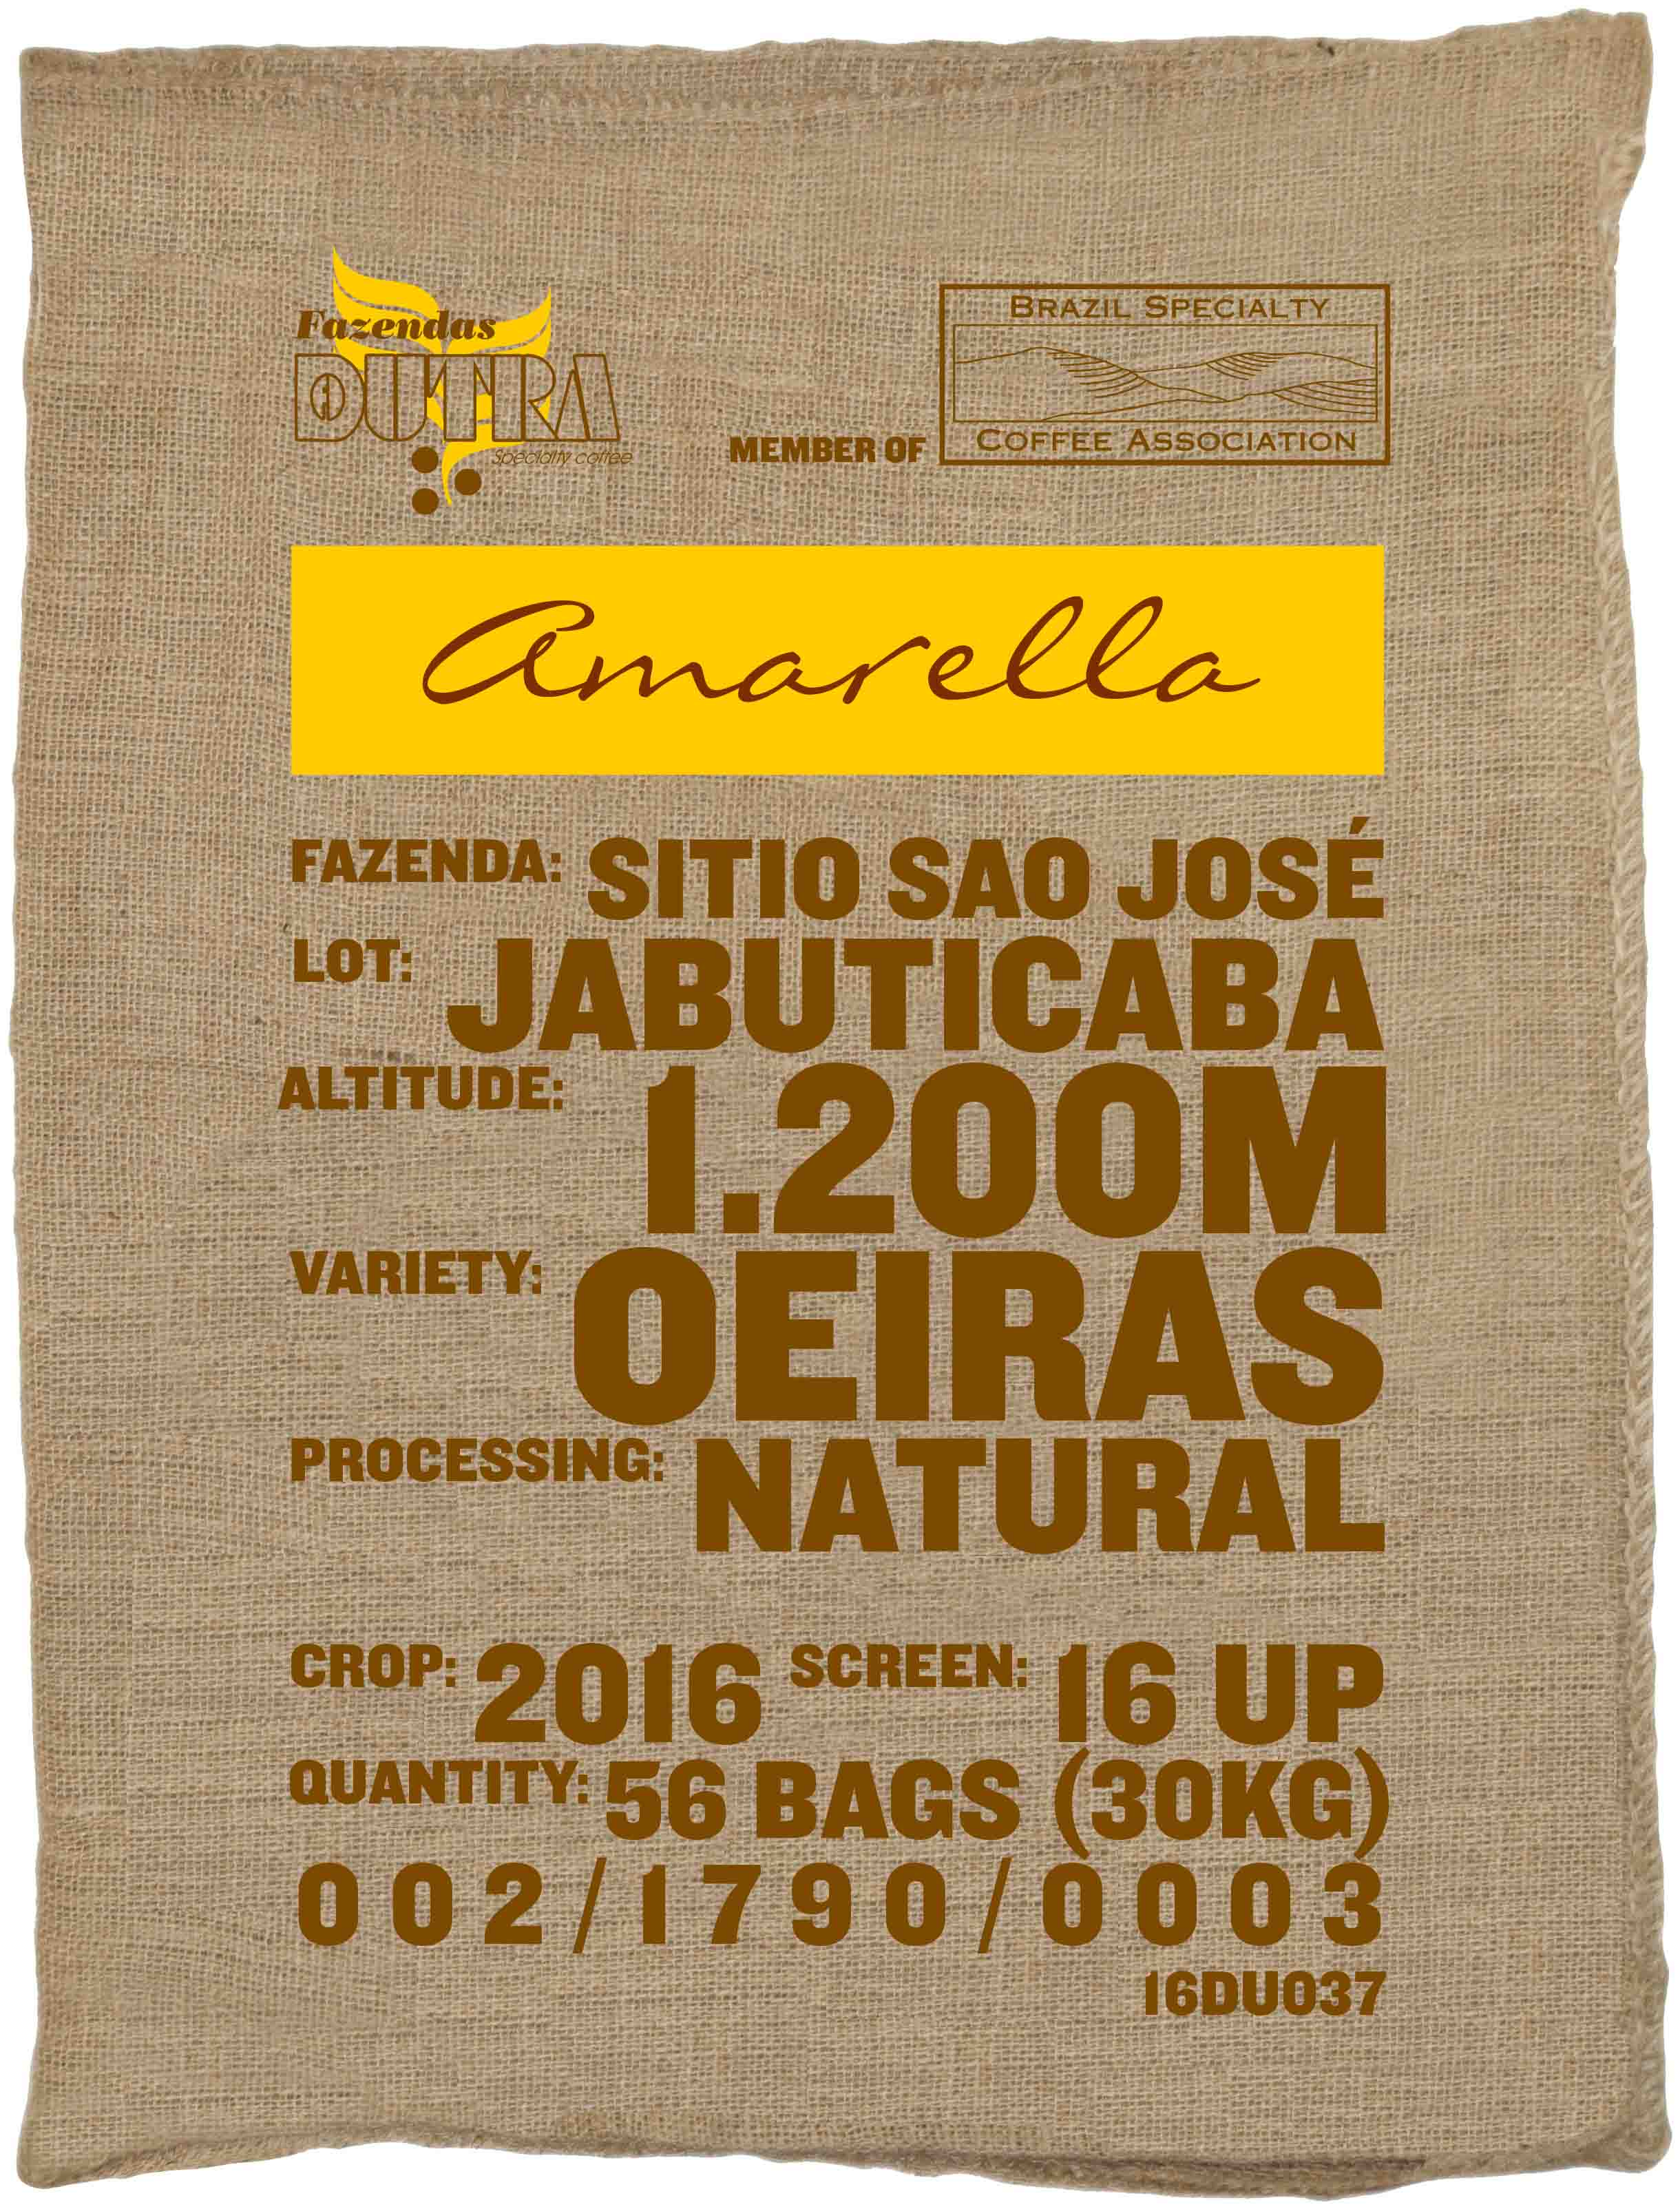 Ein Rohkaffeesack amarella Parzellenkaffee Varietät Oeiras. Fazendas Dutra Lot Jabuticaba.